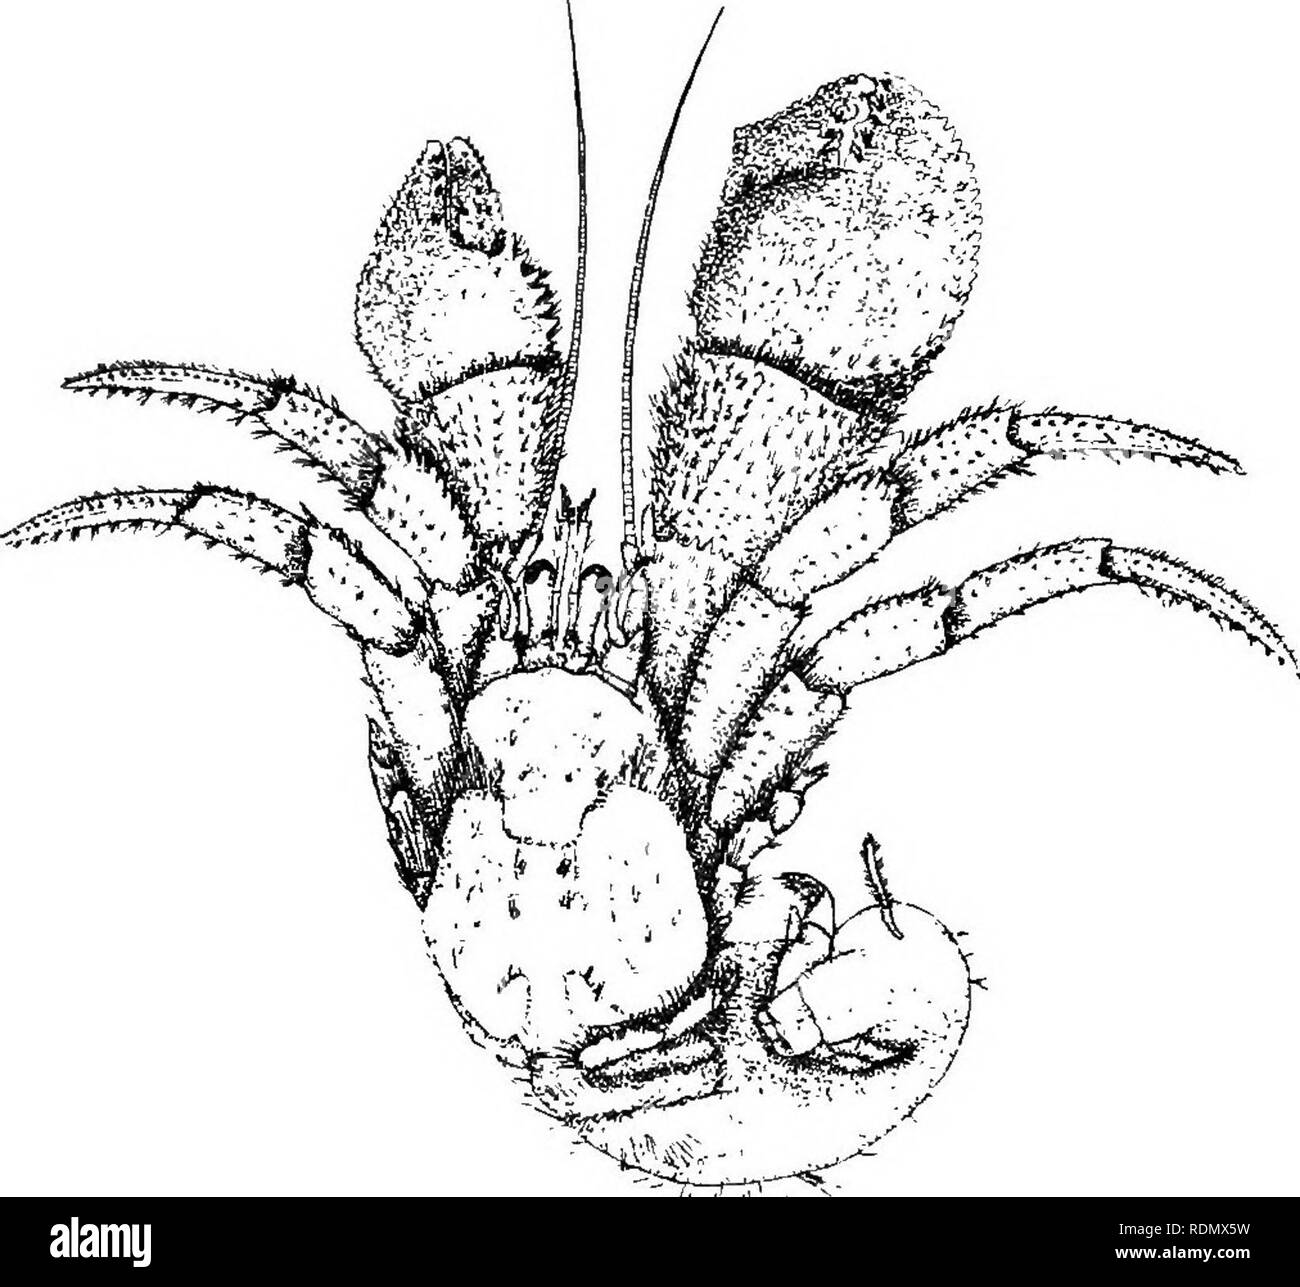 . Higher Crustacea of New York city. Crustacea. I36 NF.YV YORK STATE MUSEUM Family paguridae a Eupagurus pollicaris (Say) b Eupagurus longicarpus (Say) Hermit crabs a Pagurus pollicaris Say, T. Acad. Nat. Sci. Phila. Jour. 1817. 1:162. DeKay. /. c. 1844. p.19, pl.8, fig.21. Eupagurus pollicaris Verrill. /. c. 1874. p.548. Pagurus longicarpus Say, T. /. c. 11163. DeKay. /. c. 1844. p.20, pl.8, fig.22. Eupagurus longicarpus Verrill. /. c. 1874. p.S49- Kingsley, J. S. Am. Nat. 1888. 22:888.. ' ''  Fig. 8 Eupagurus pollicaris Asymmetric forms with abdomen large but its integument not calcified. A Stock Photo